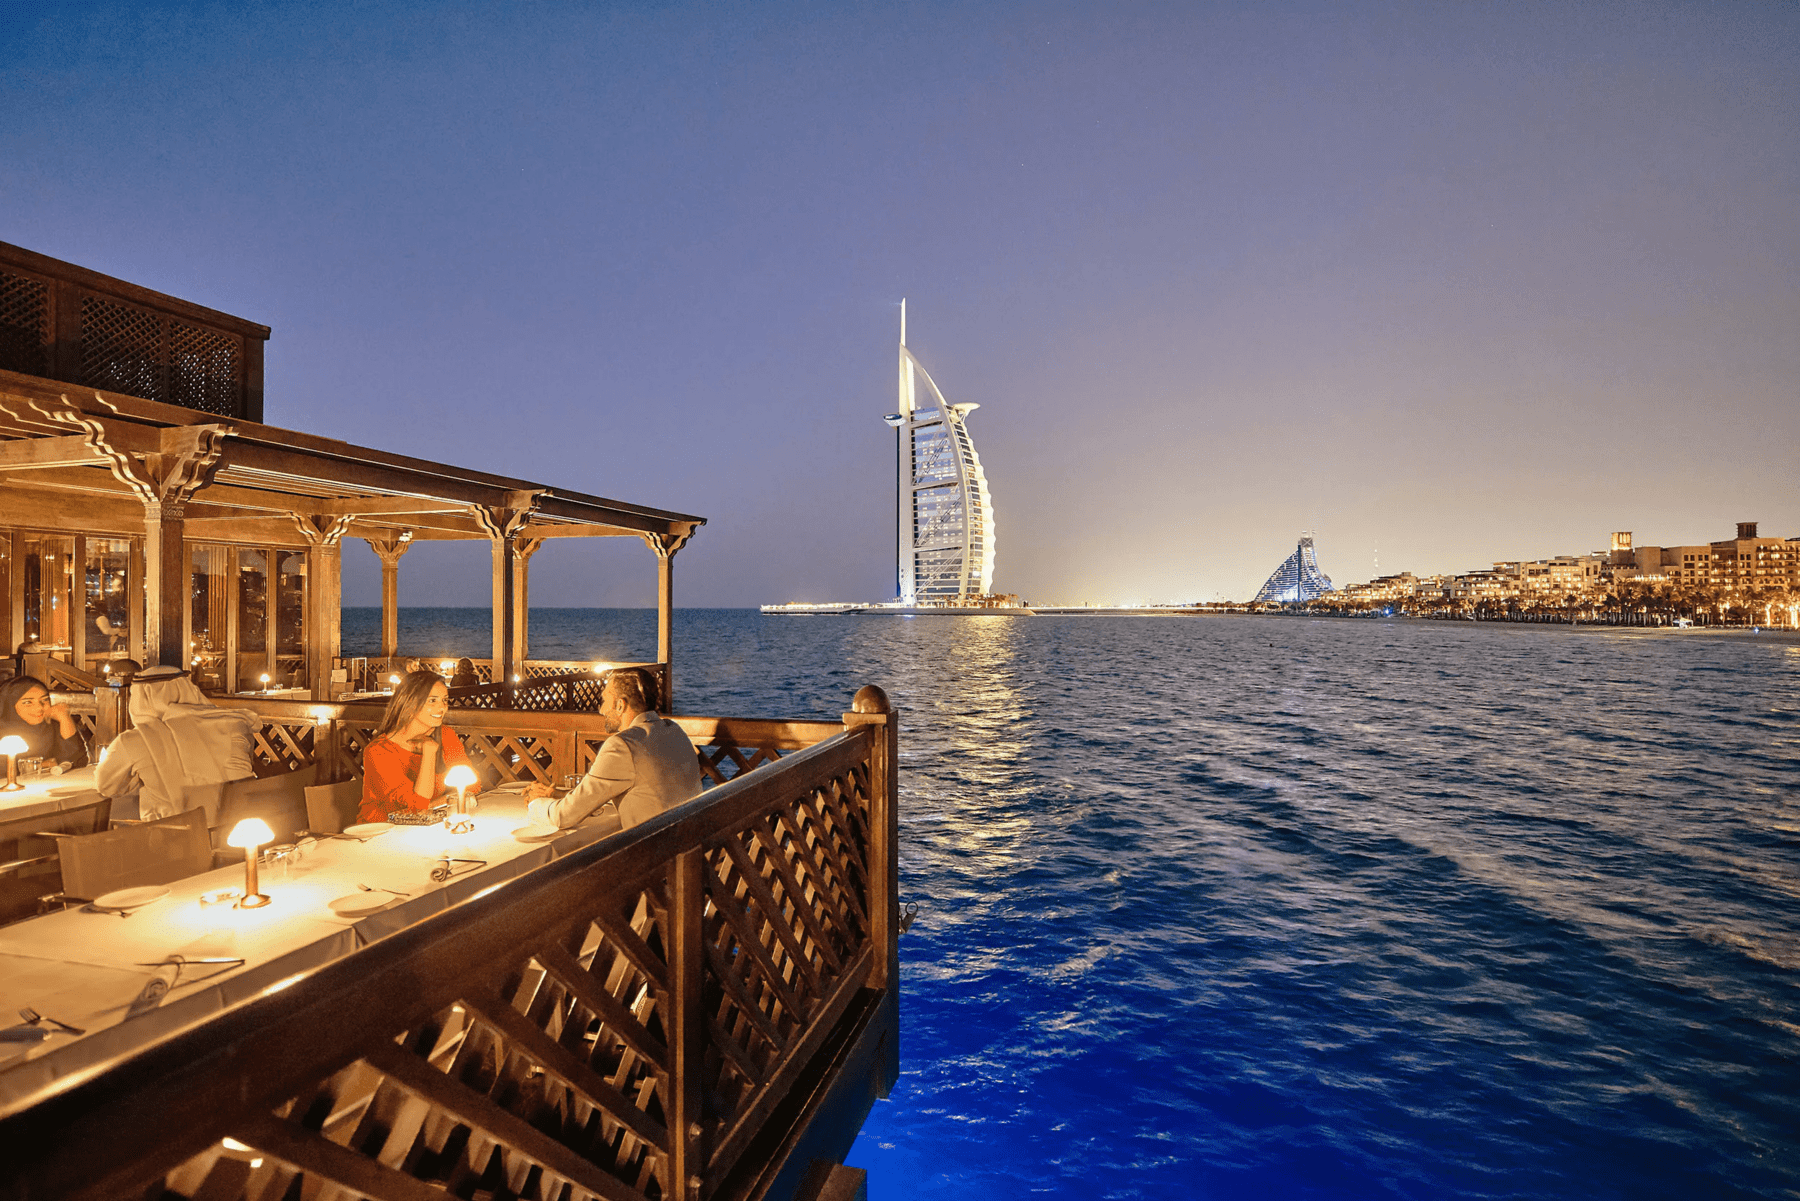 Best restaurants near Burj Al Arab